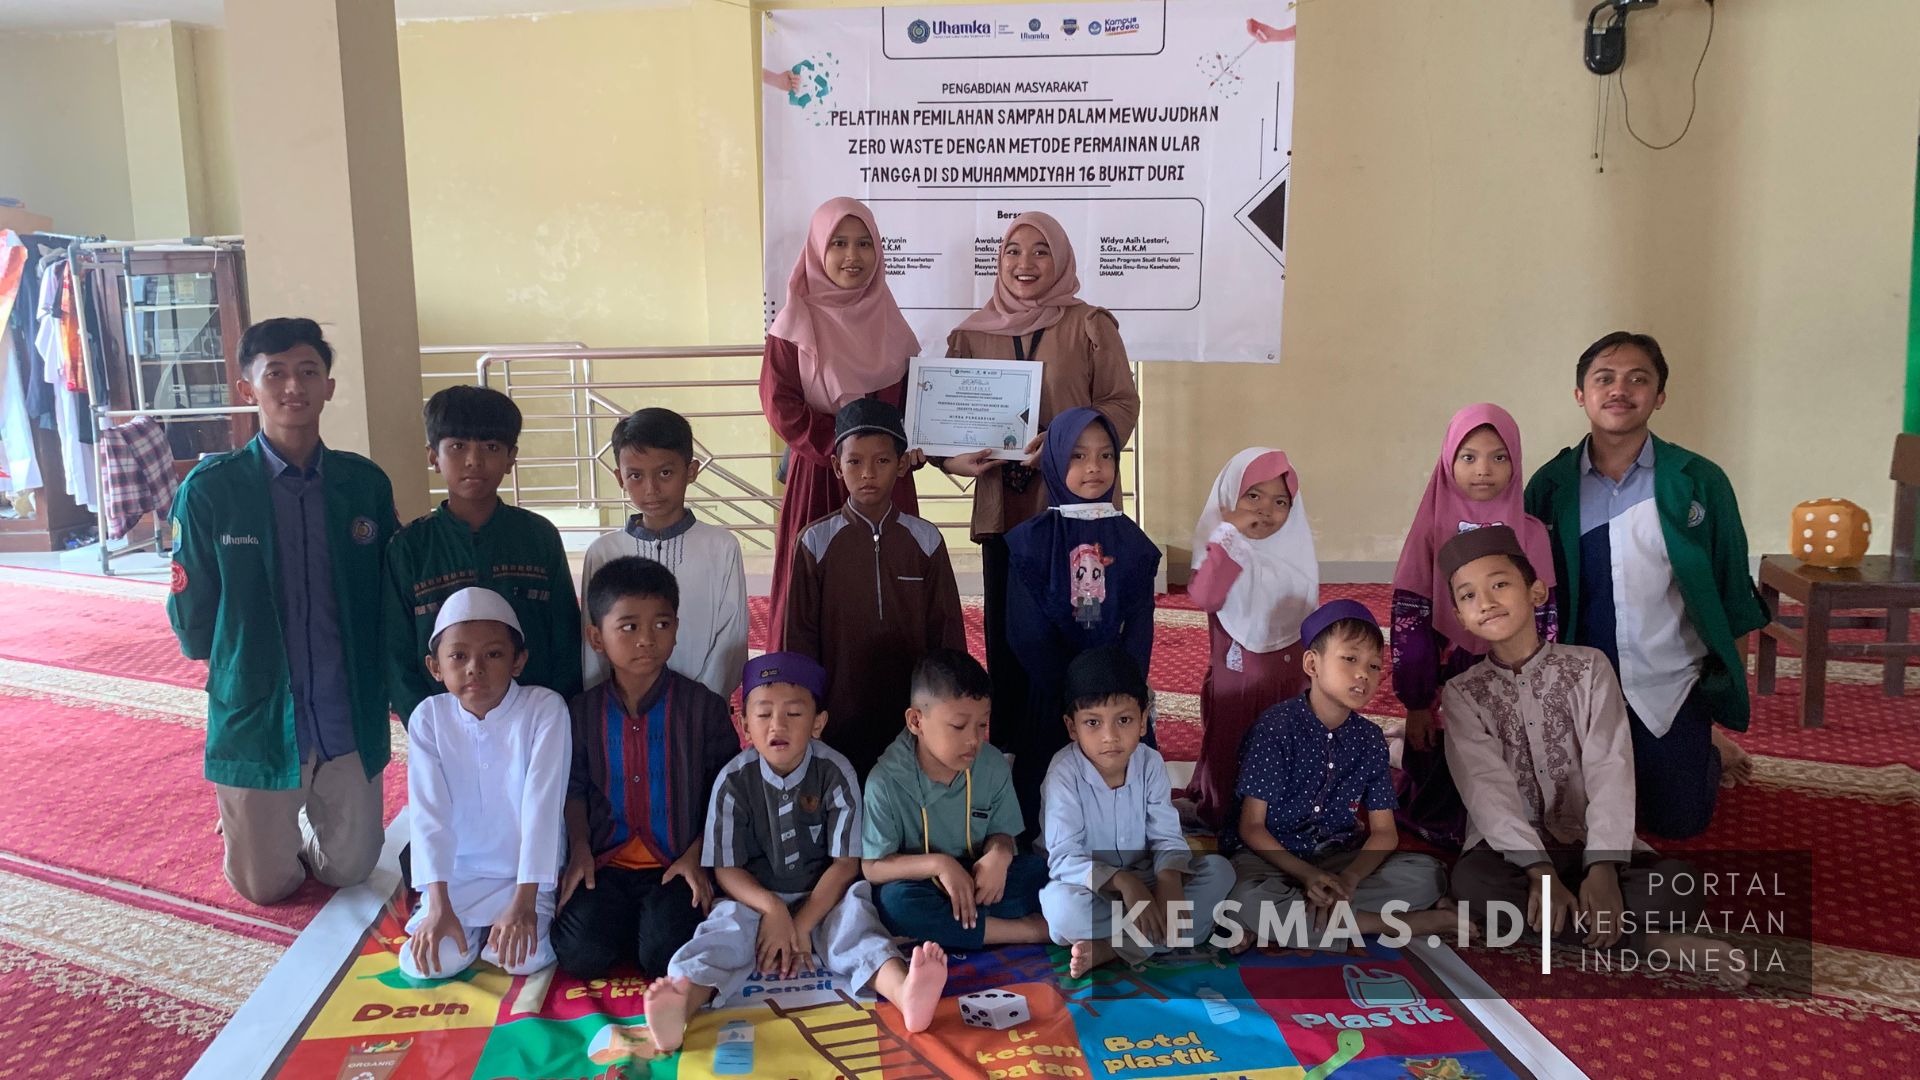 Pelatihan Pemilahan Sampah Dalam Mewujudkan Zero Waste Dengan Metode Permainan Ular Tangga di SD Muhammadiyah 16 Bukit Duri